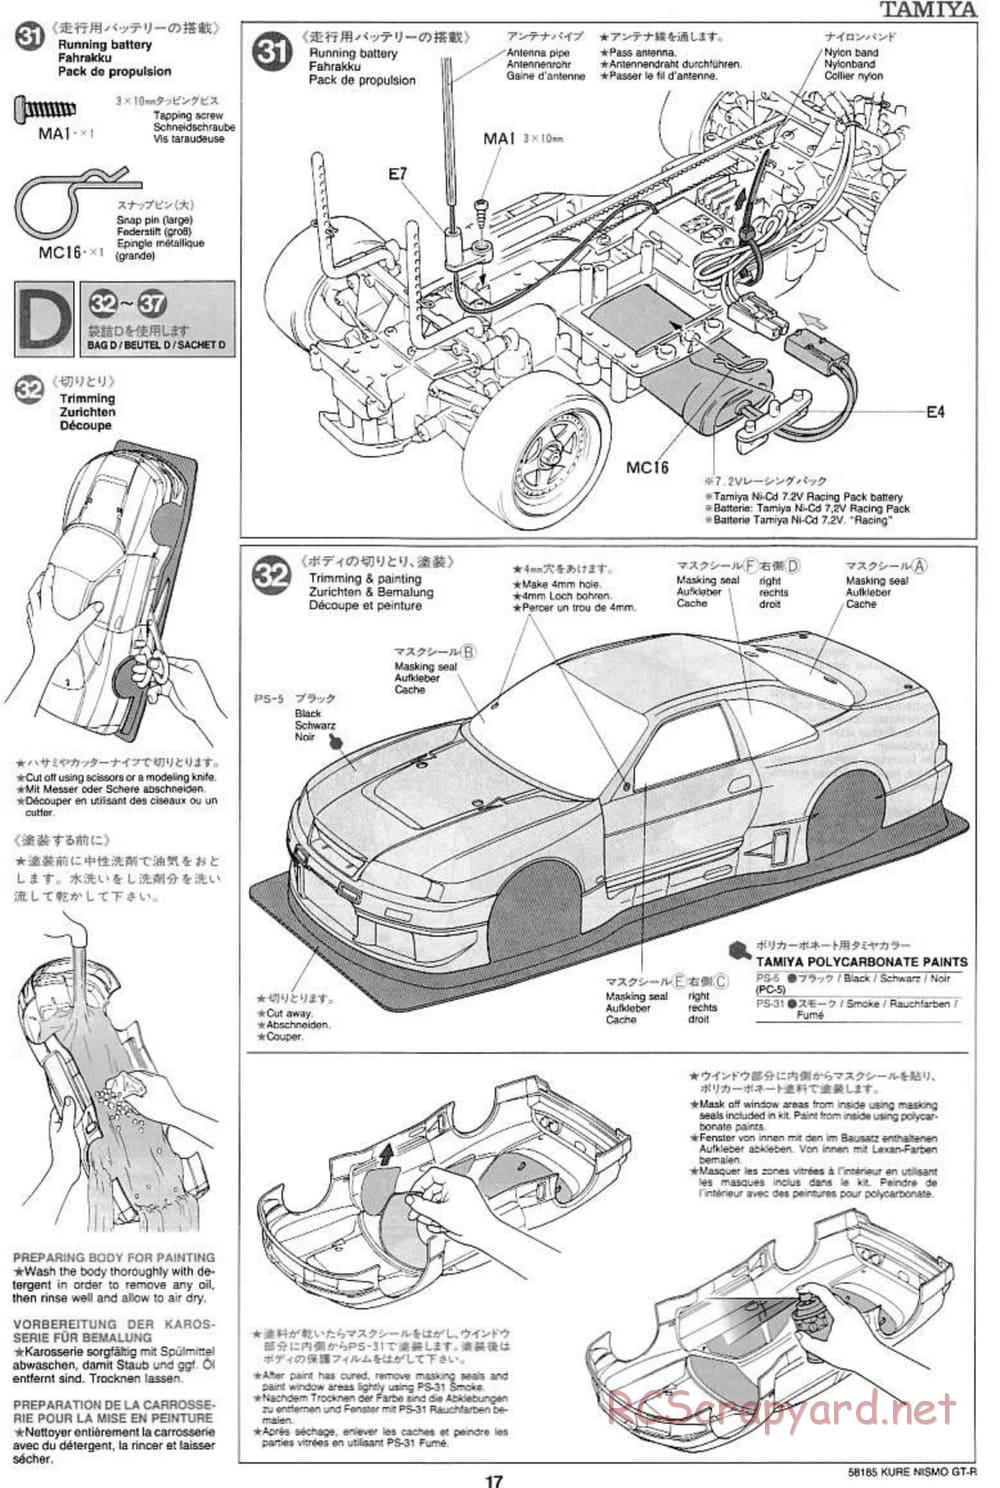 Tamiya - Kure Nismo GT-R - TA-03F Chassis - Manual - Page 17